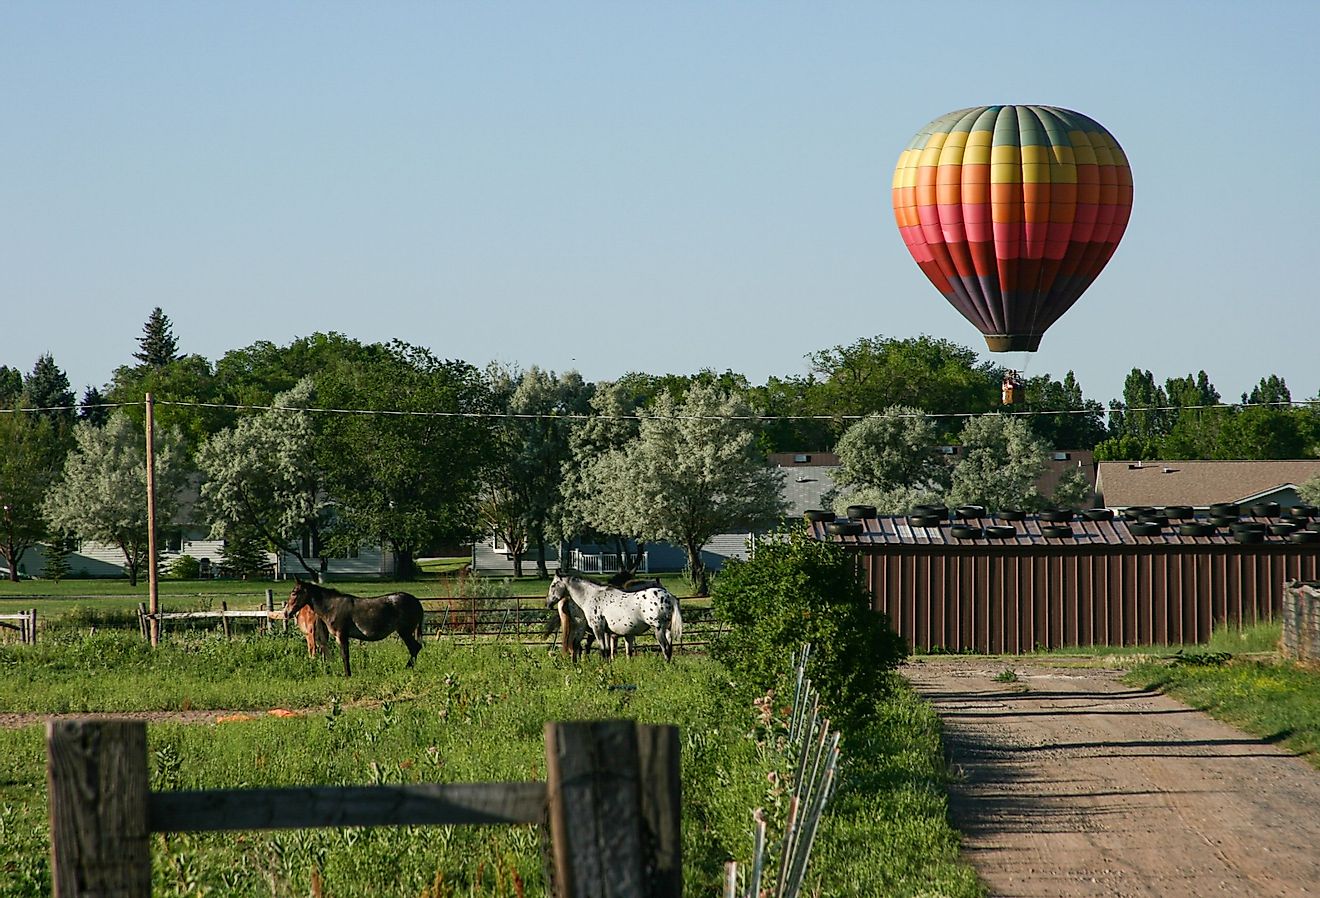 Annual hot air balloon festival in Riverton, Wyoming. Image credit Wirestock Creators via Shutterstock